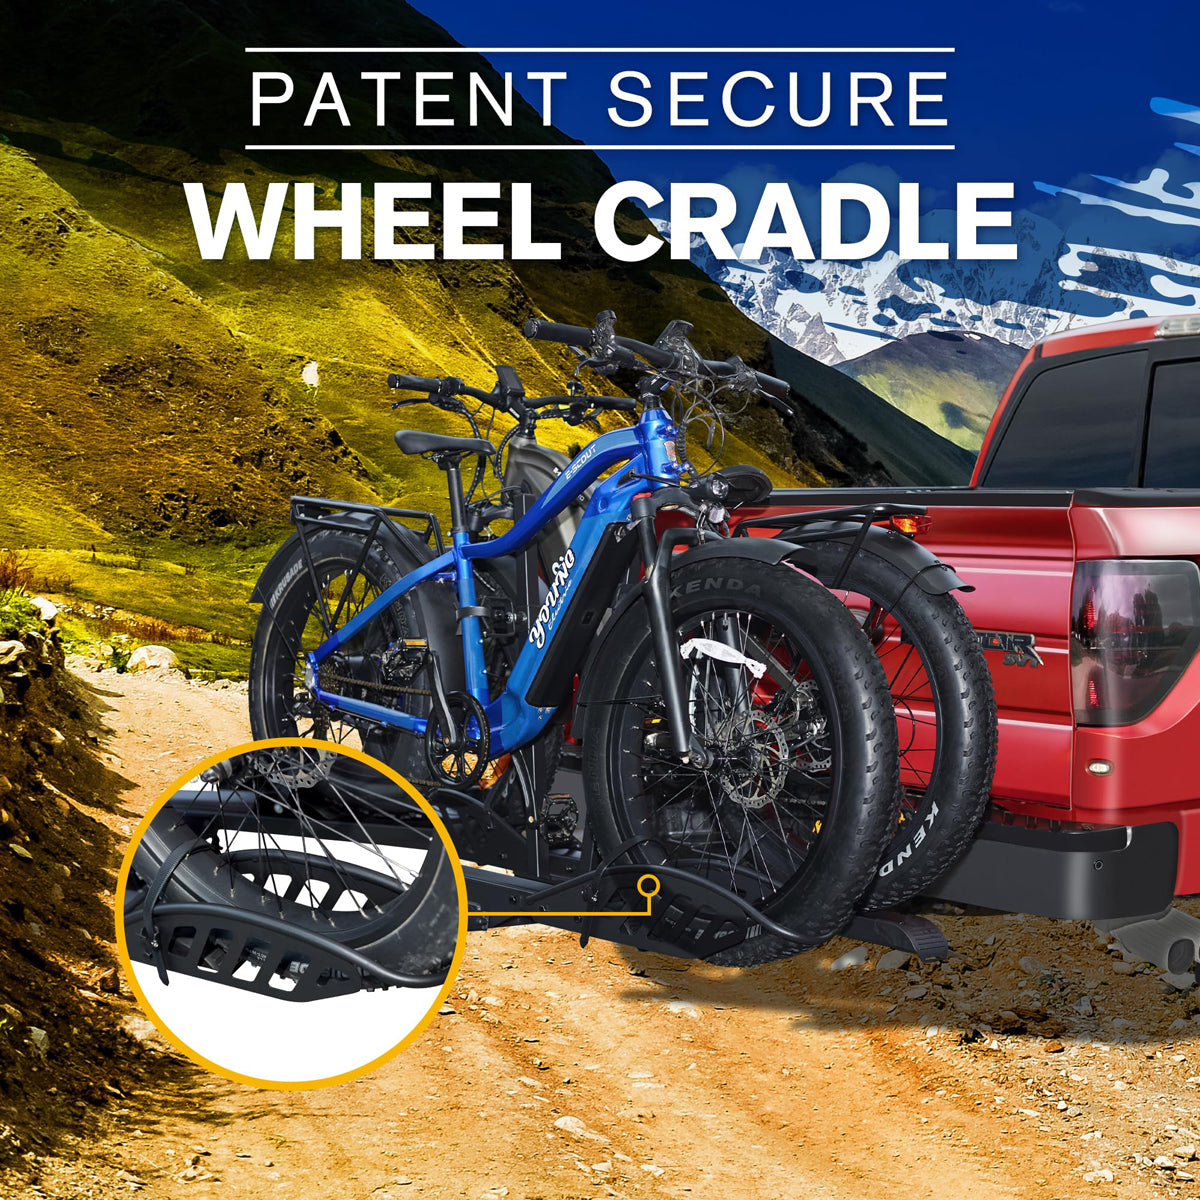 Patent Secure Wheel Cradle